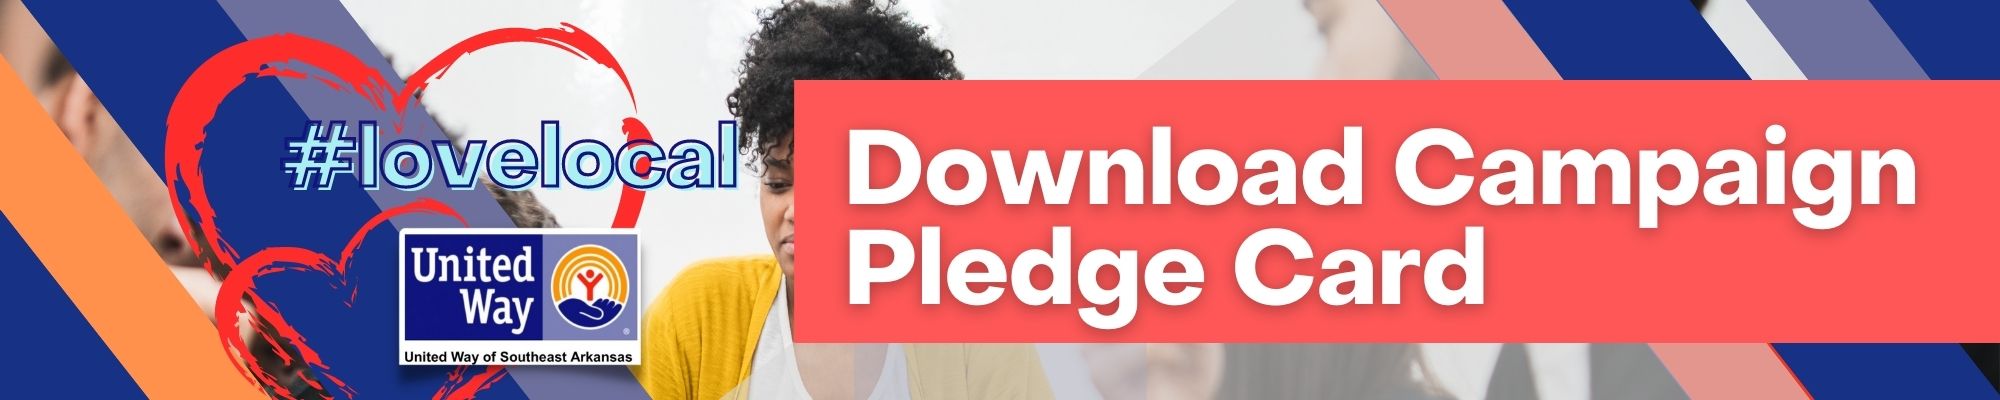 Download Campaign Pledge Card 